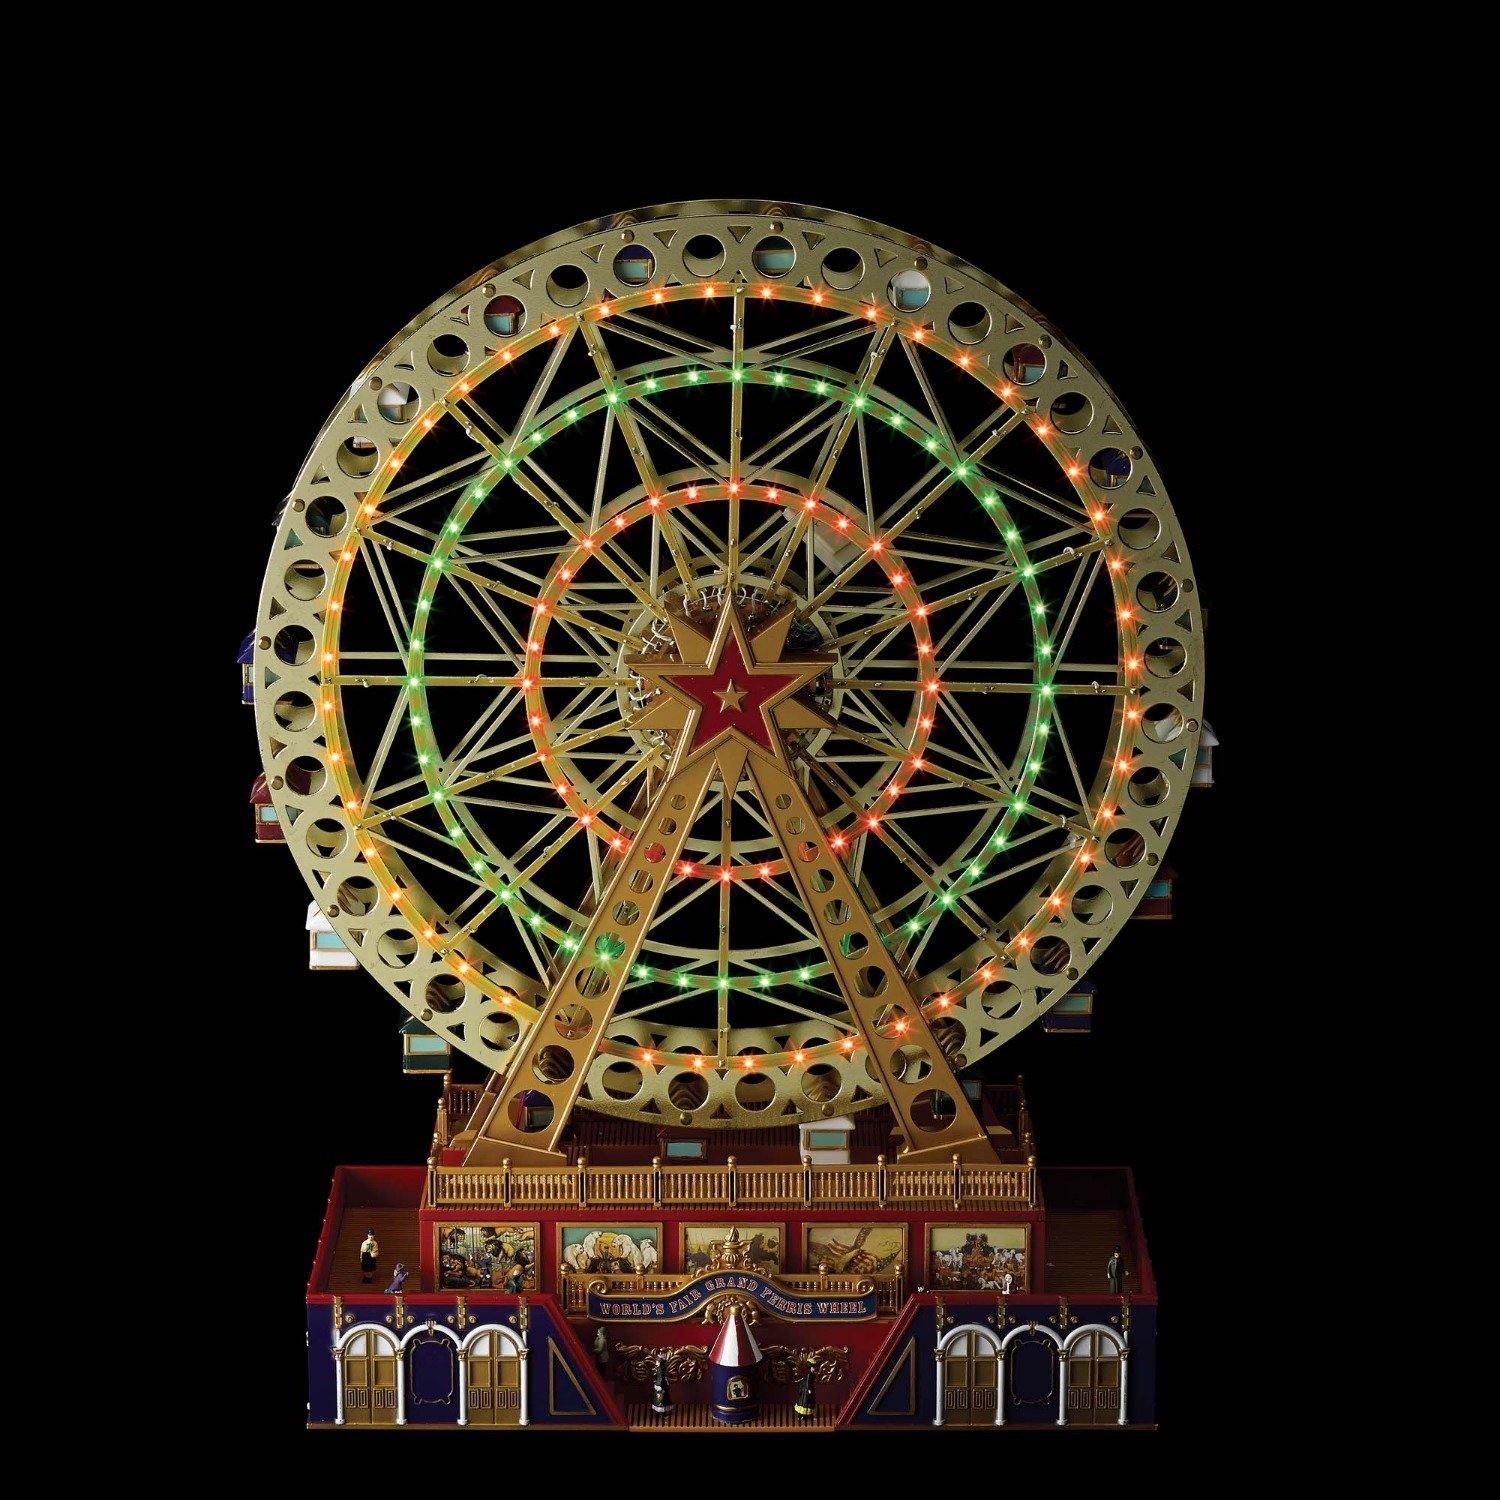 Mr. Christmas - World's Fair Grand Ferris Wheel - KleinLand